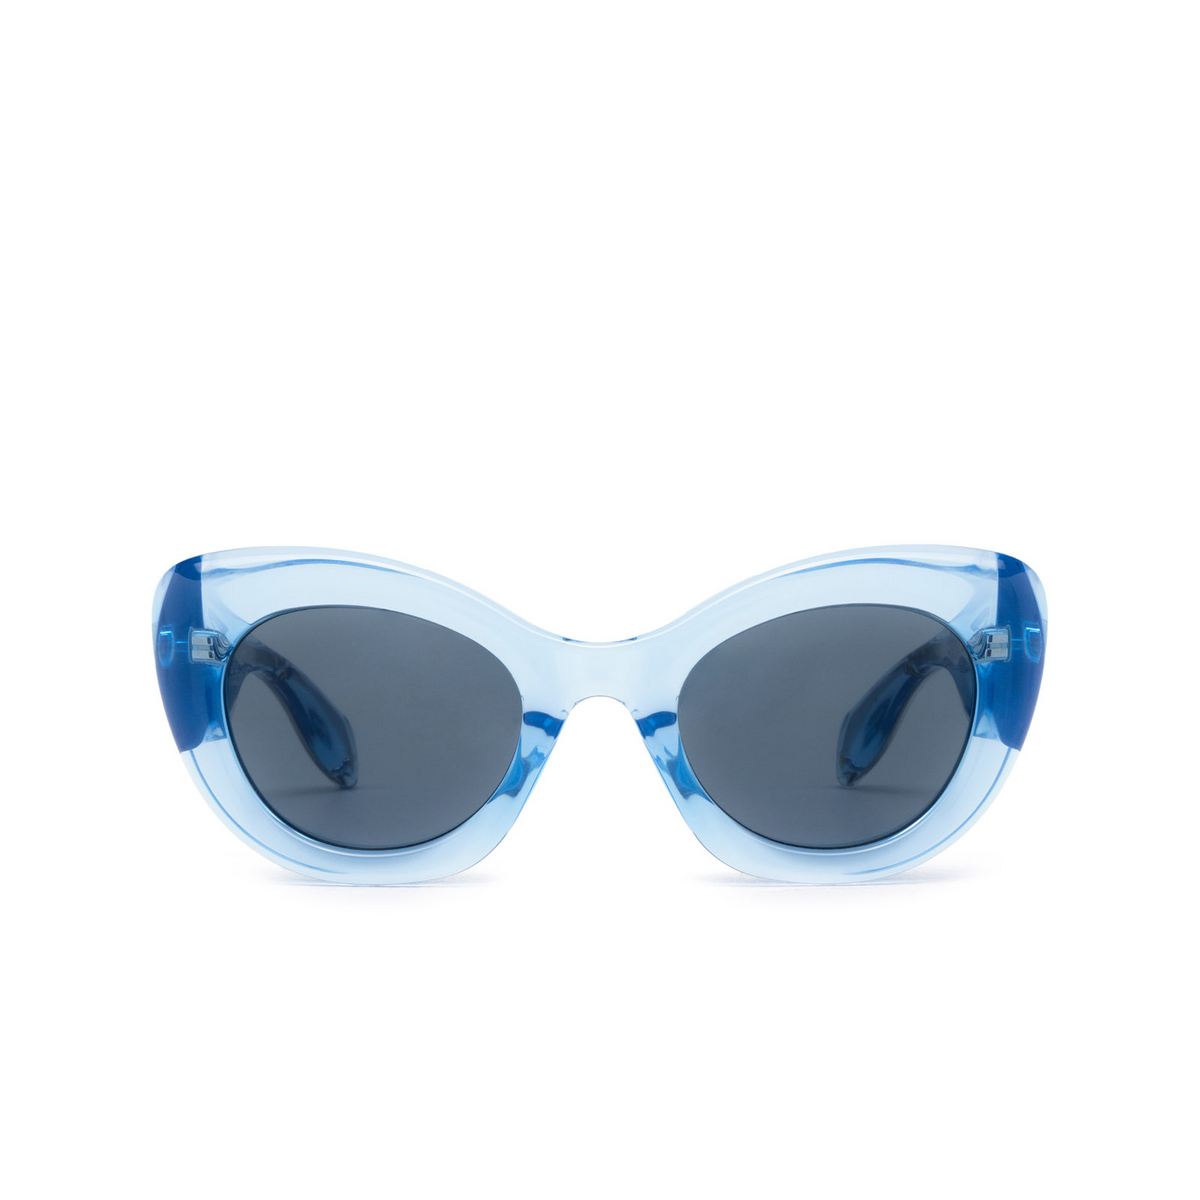 Alexander McQueen The Curve Cat-eye Sunglasses 004 Light Blue - front view